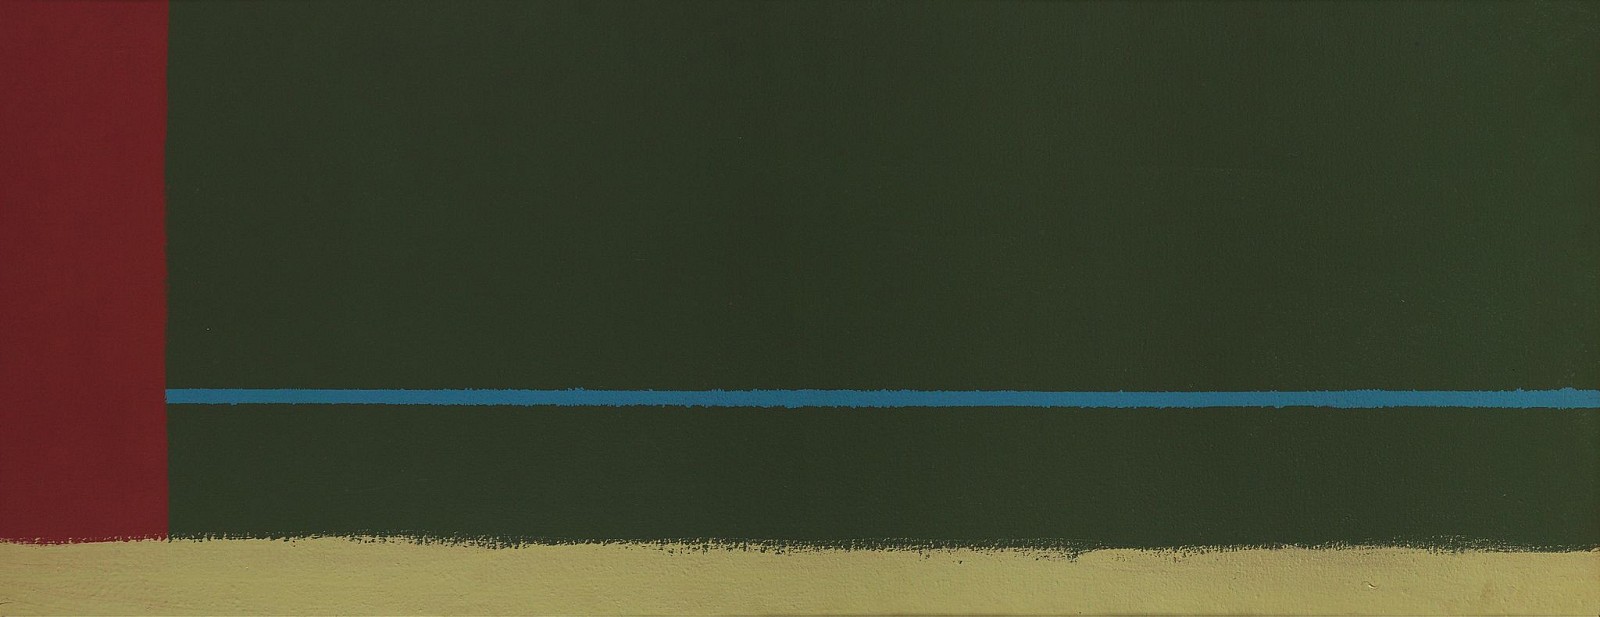 Dan Christensen, Montauk Line #2 | SOLD, 1970
Enamel and acrylic on canvas, 18 x 46 in. (45.7 x 116.8 cm)
CHR-00154